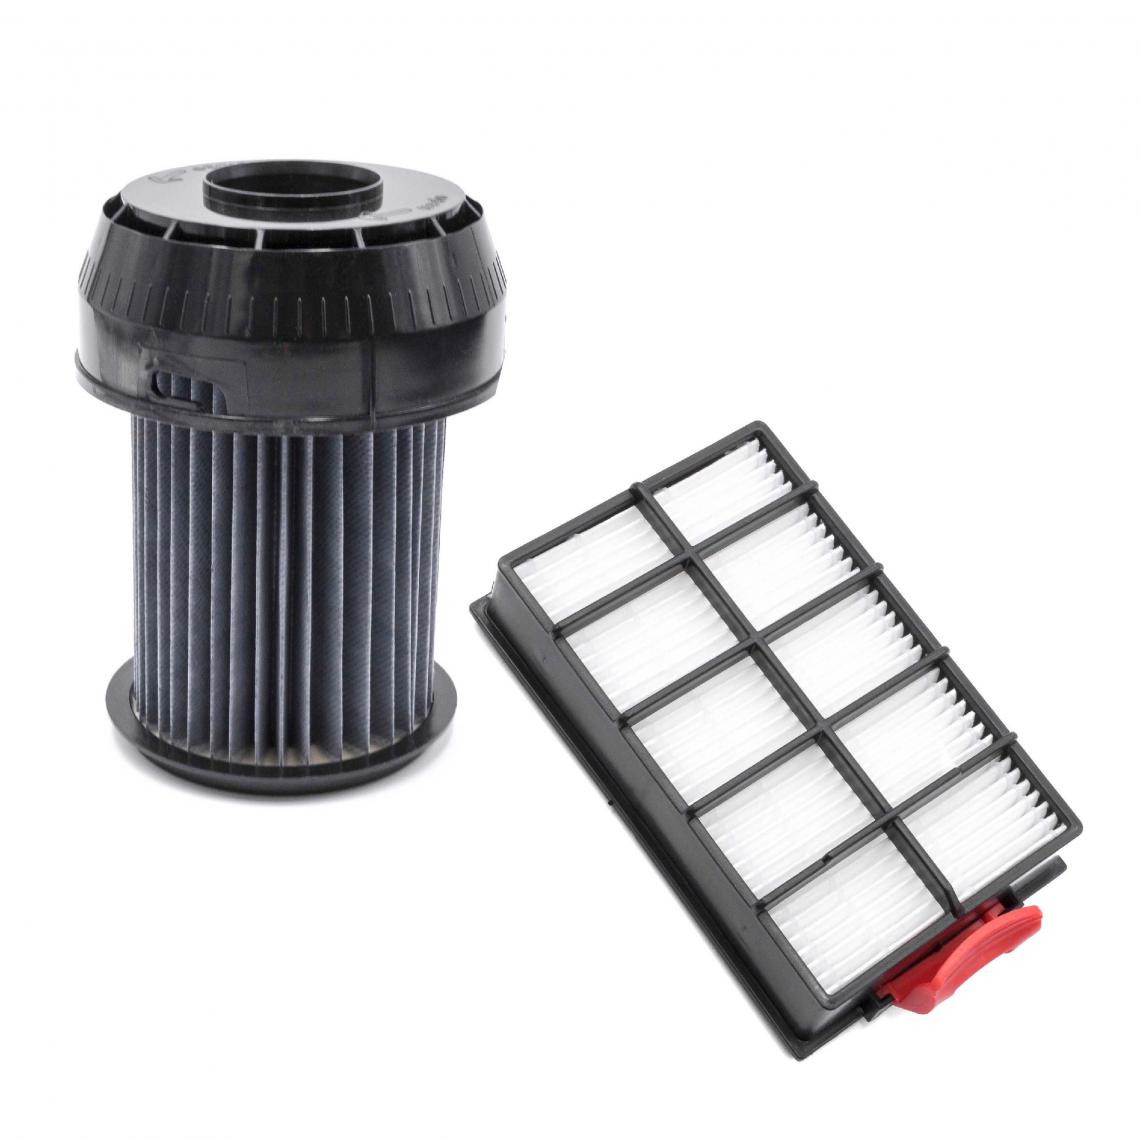 Vhbw - vhbw Lot de filtres compatible avec Bosch BBZ 155 HF, BBZ155HF00, BGS6143001, BGS6184201 aspirateur - 2x Filtres de rechange - Accessoire entretien des sols